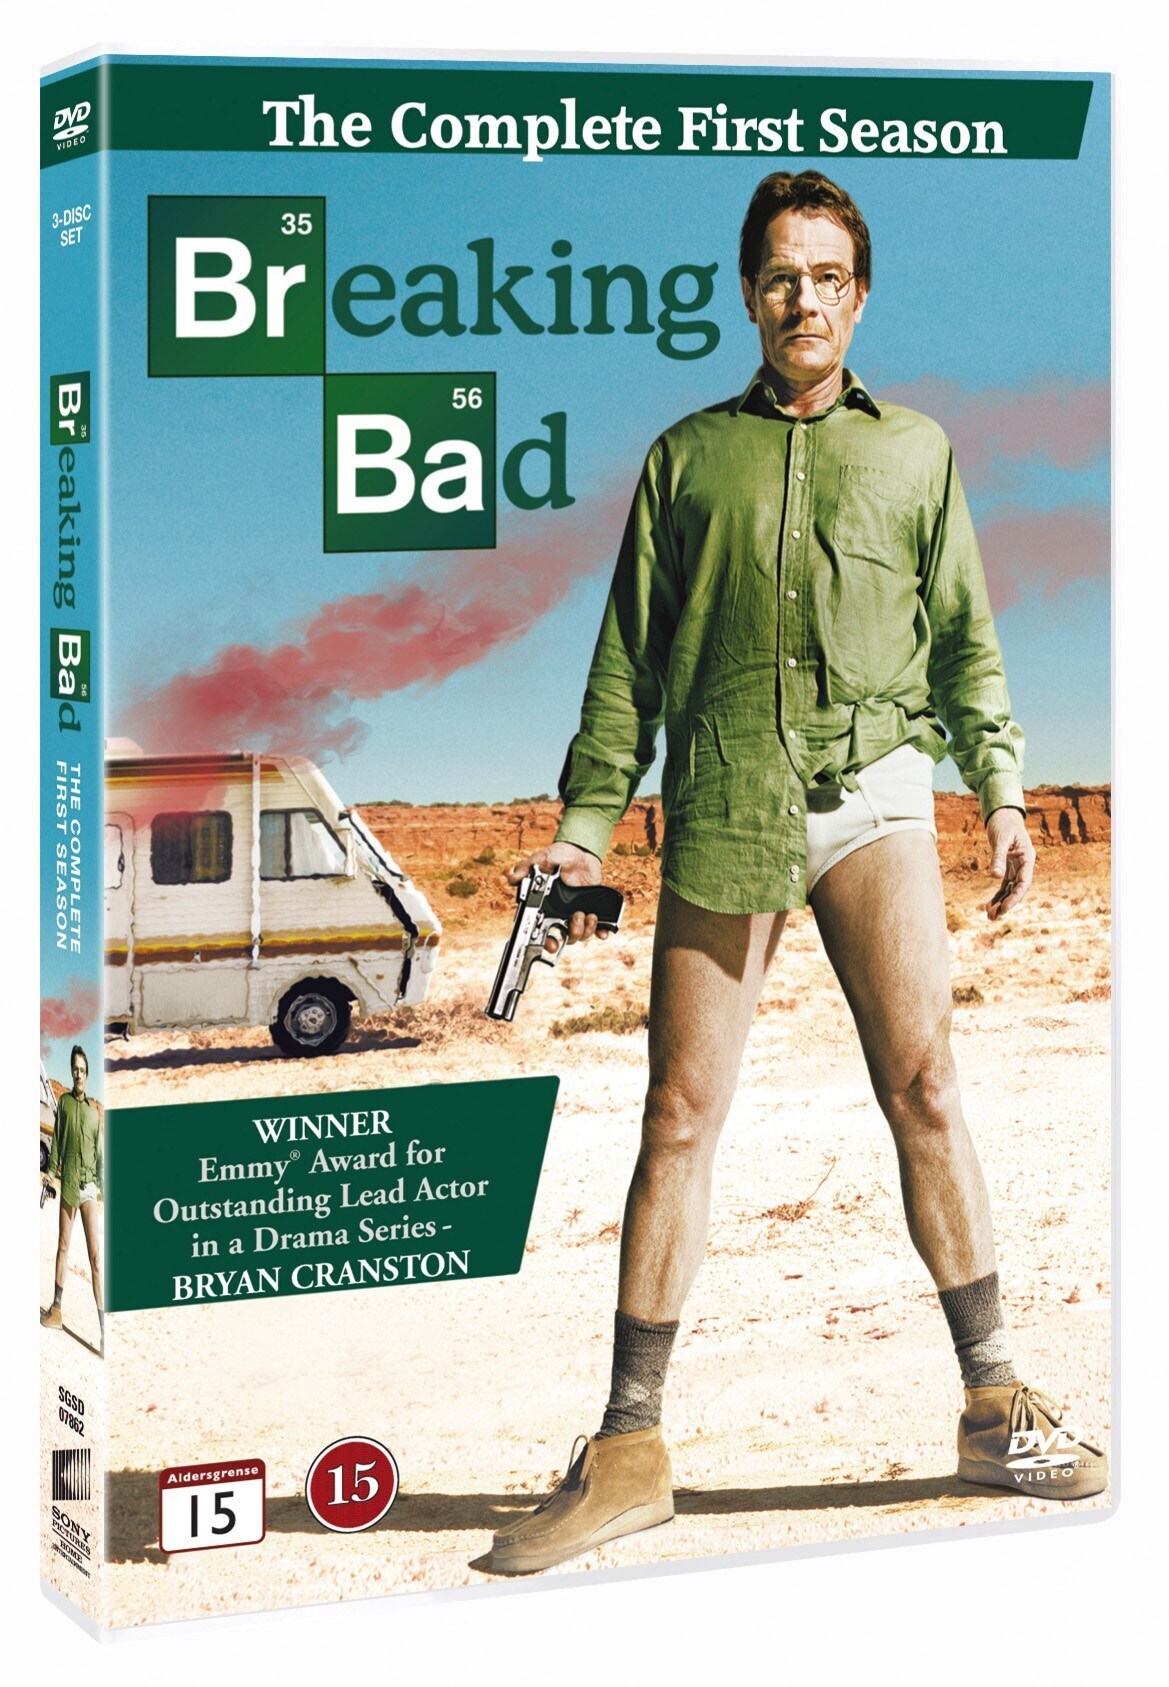 Breaking Bad - Sæson 1 - DVD boks | Elgiganten